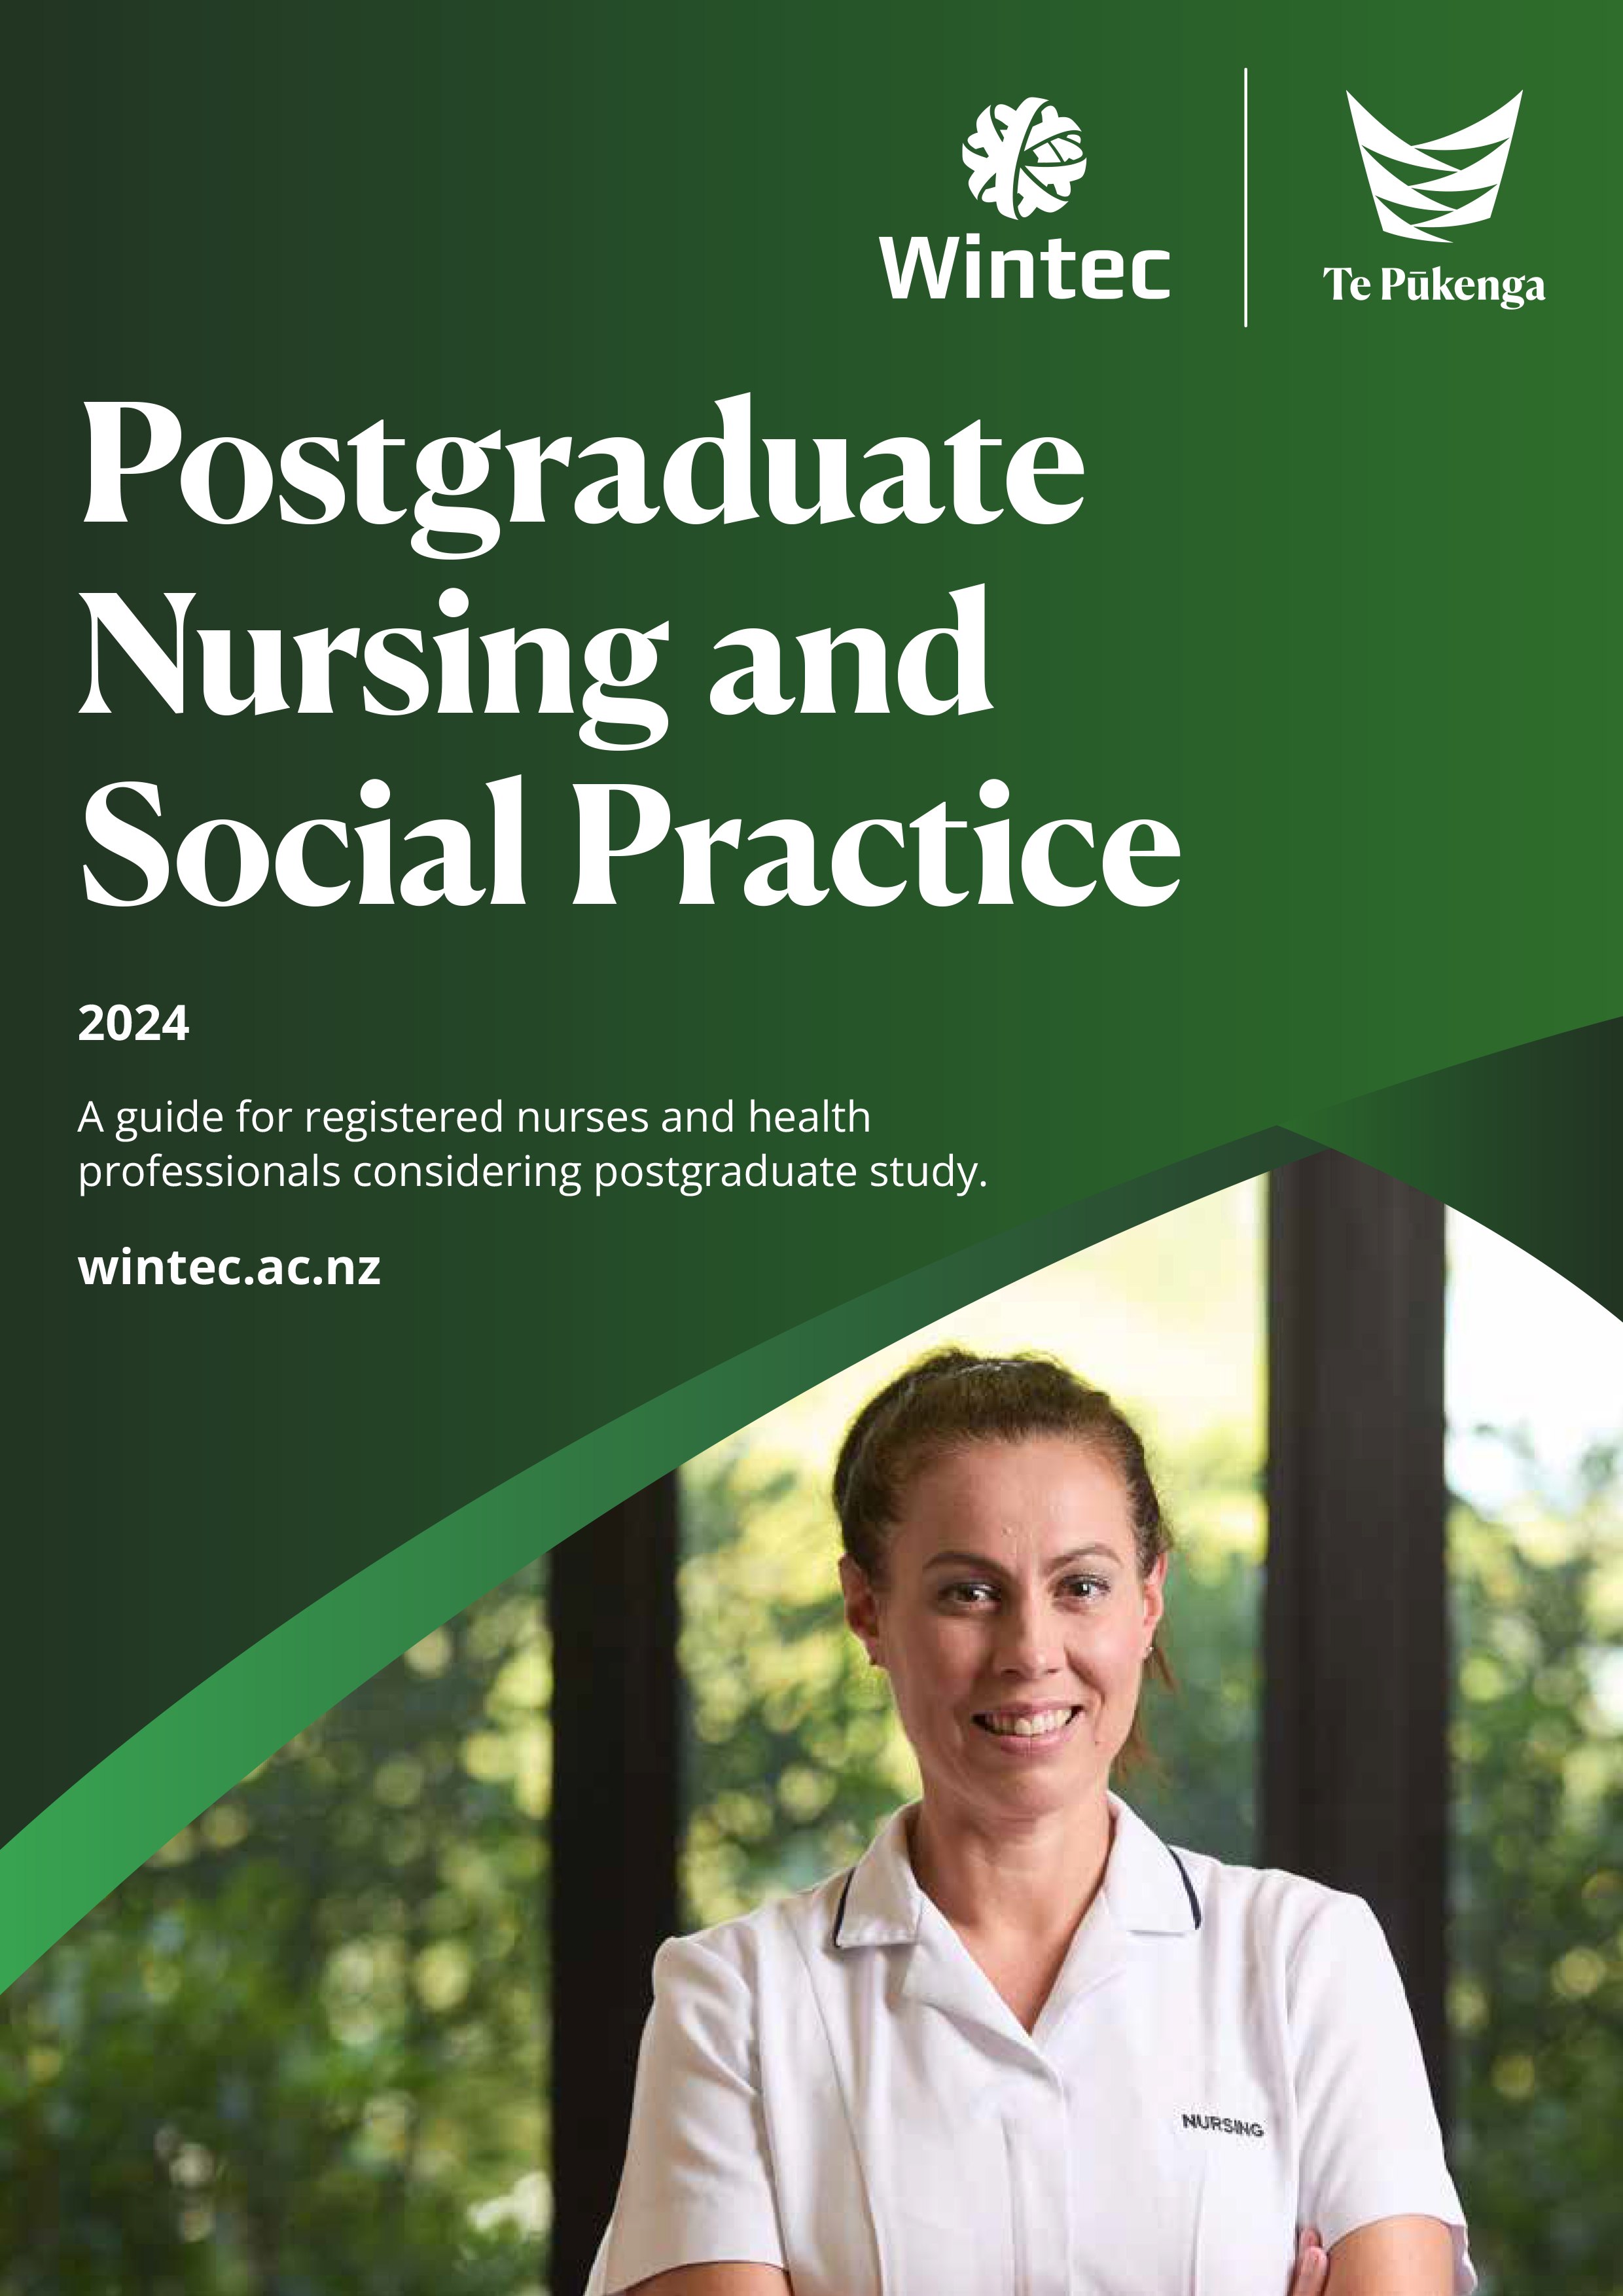 Postgraduate Nursing and Social Practice Guide